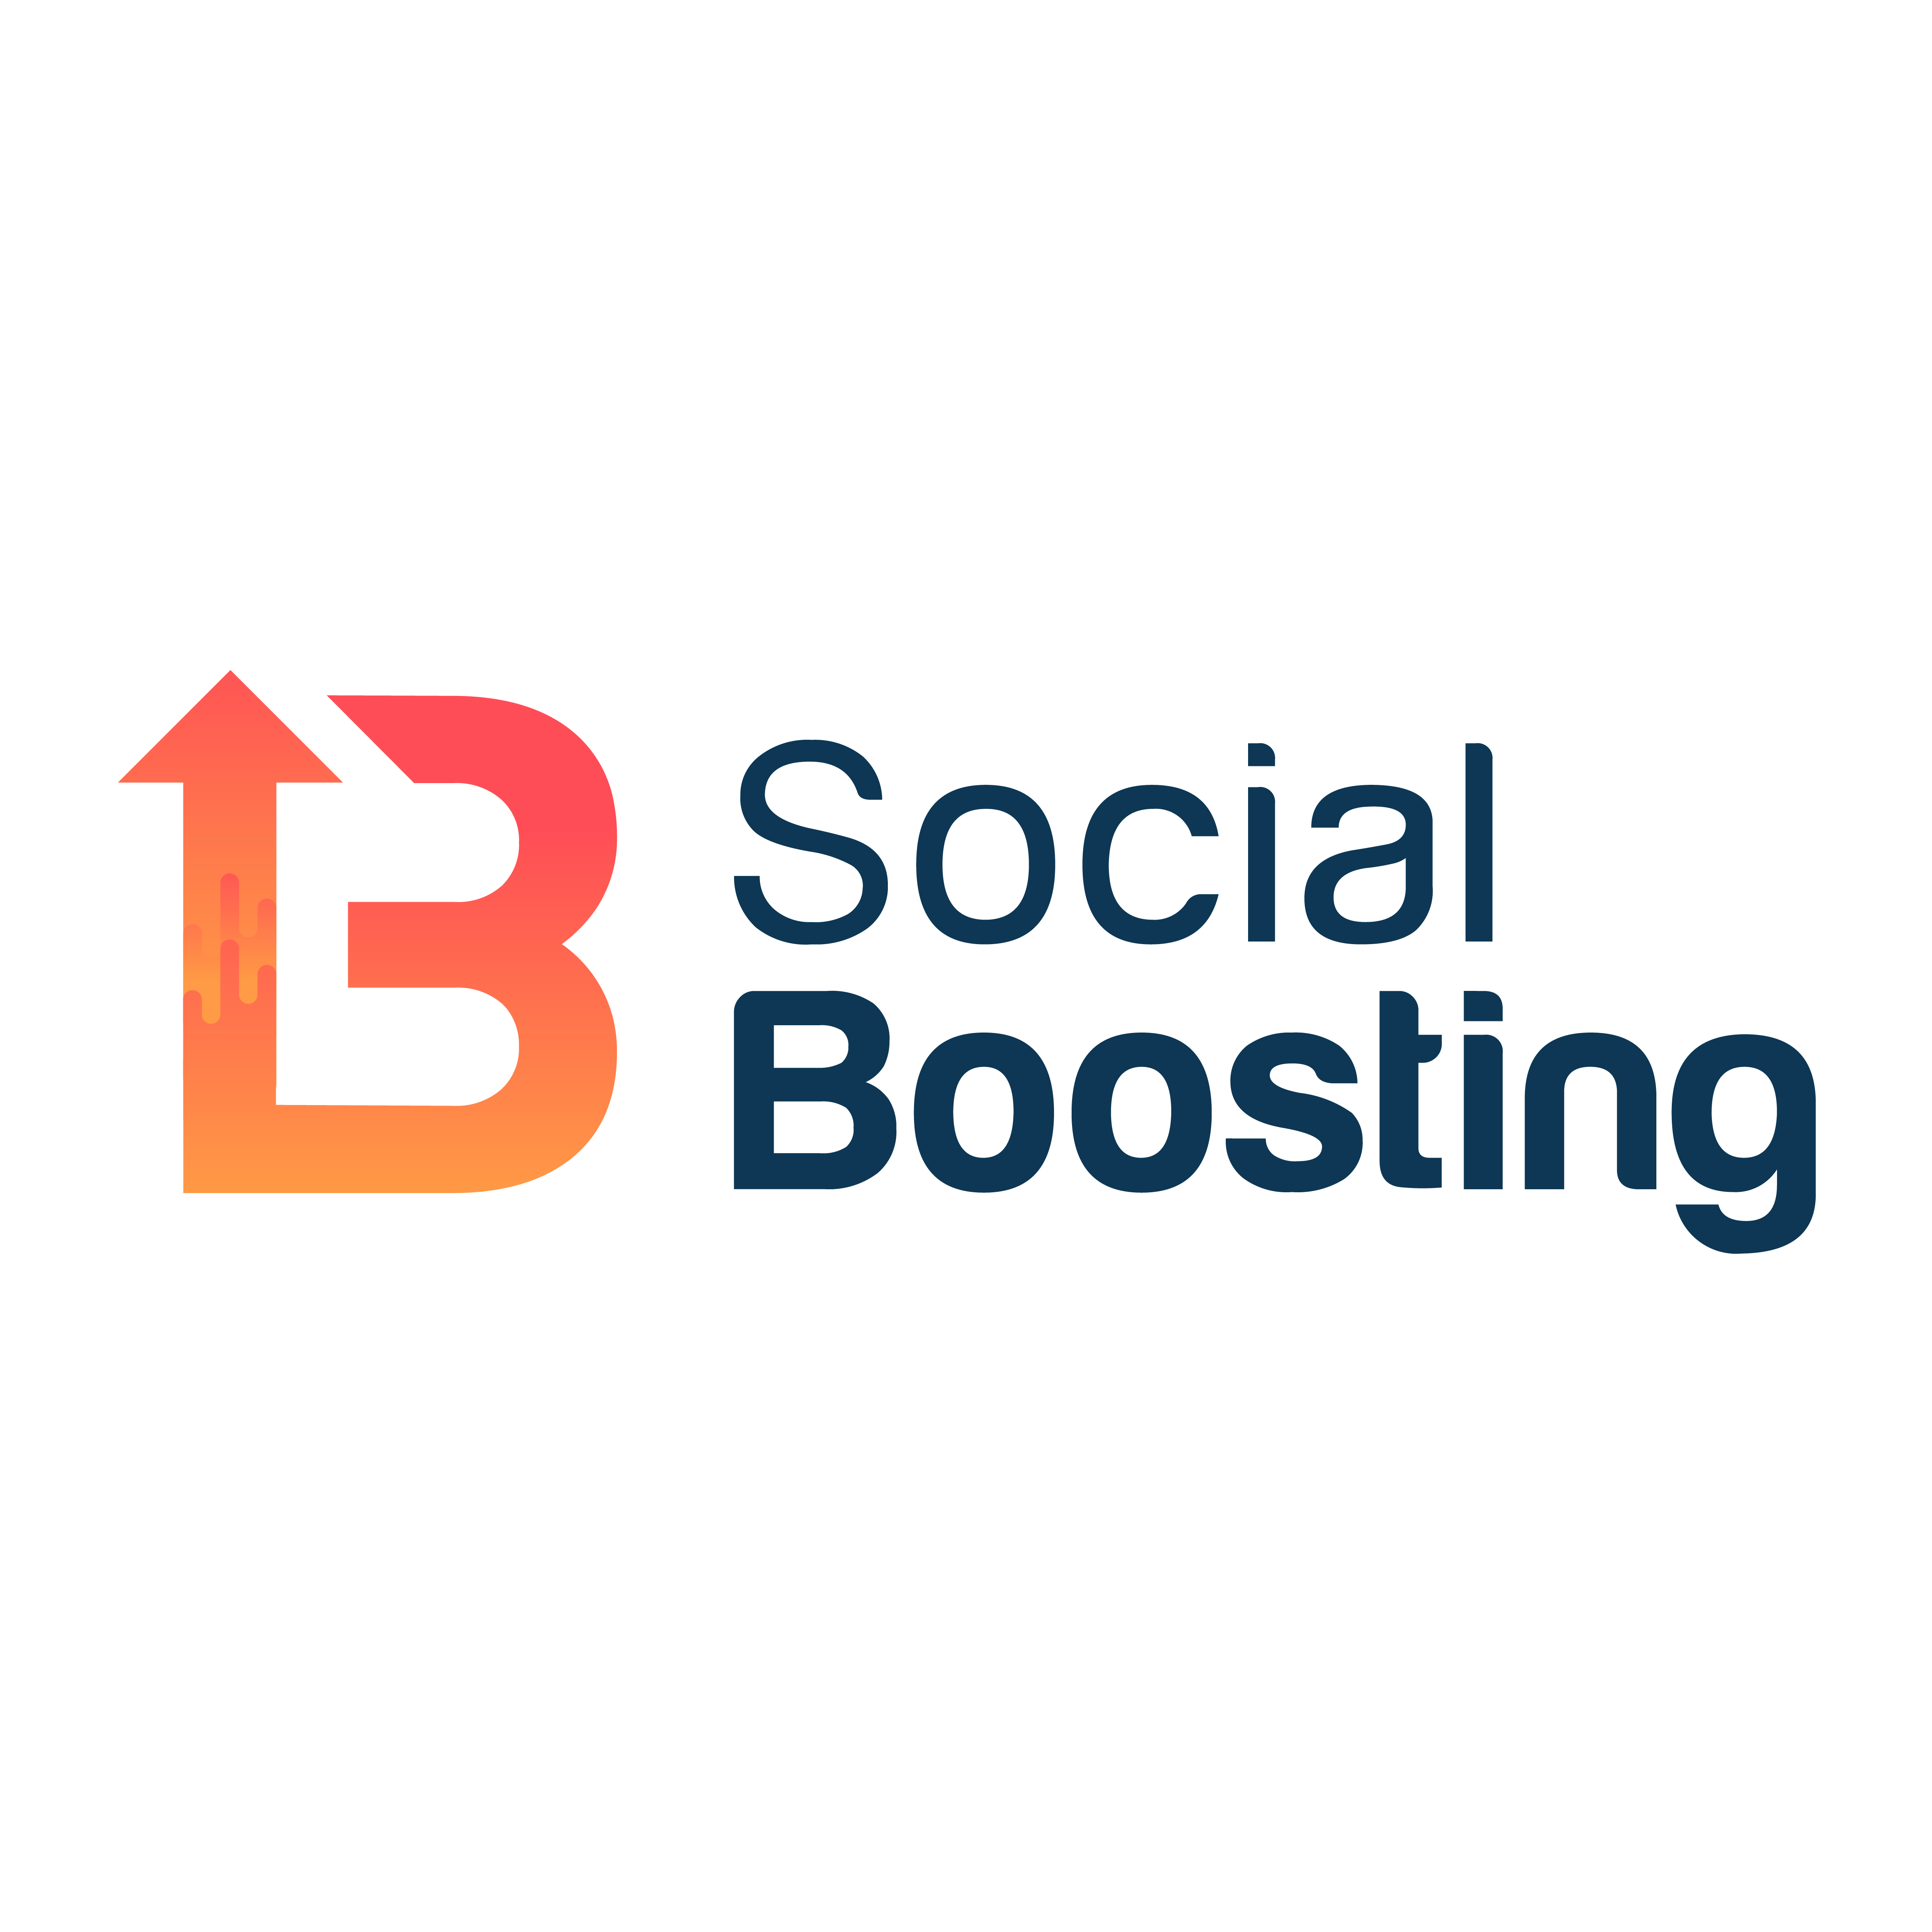 Social-Boosting-logo.png